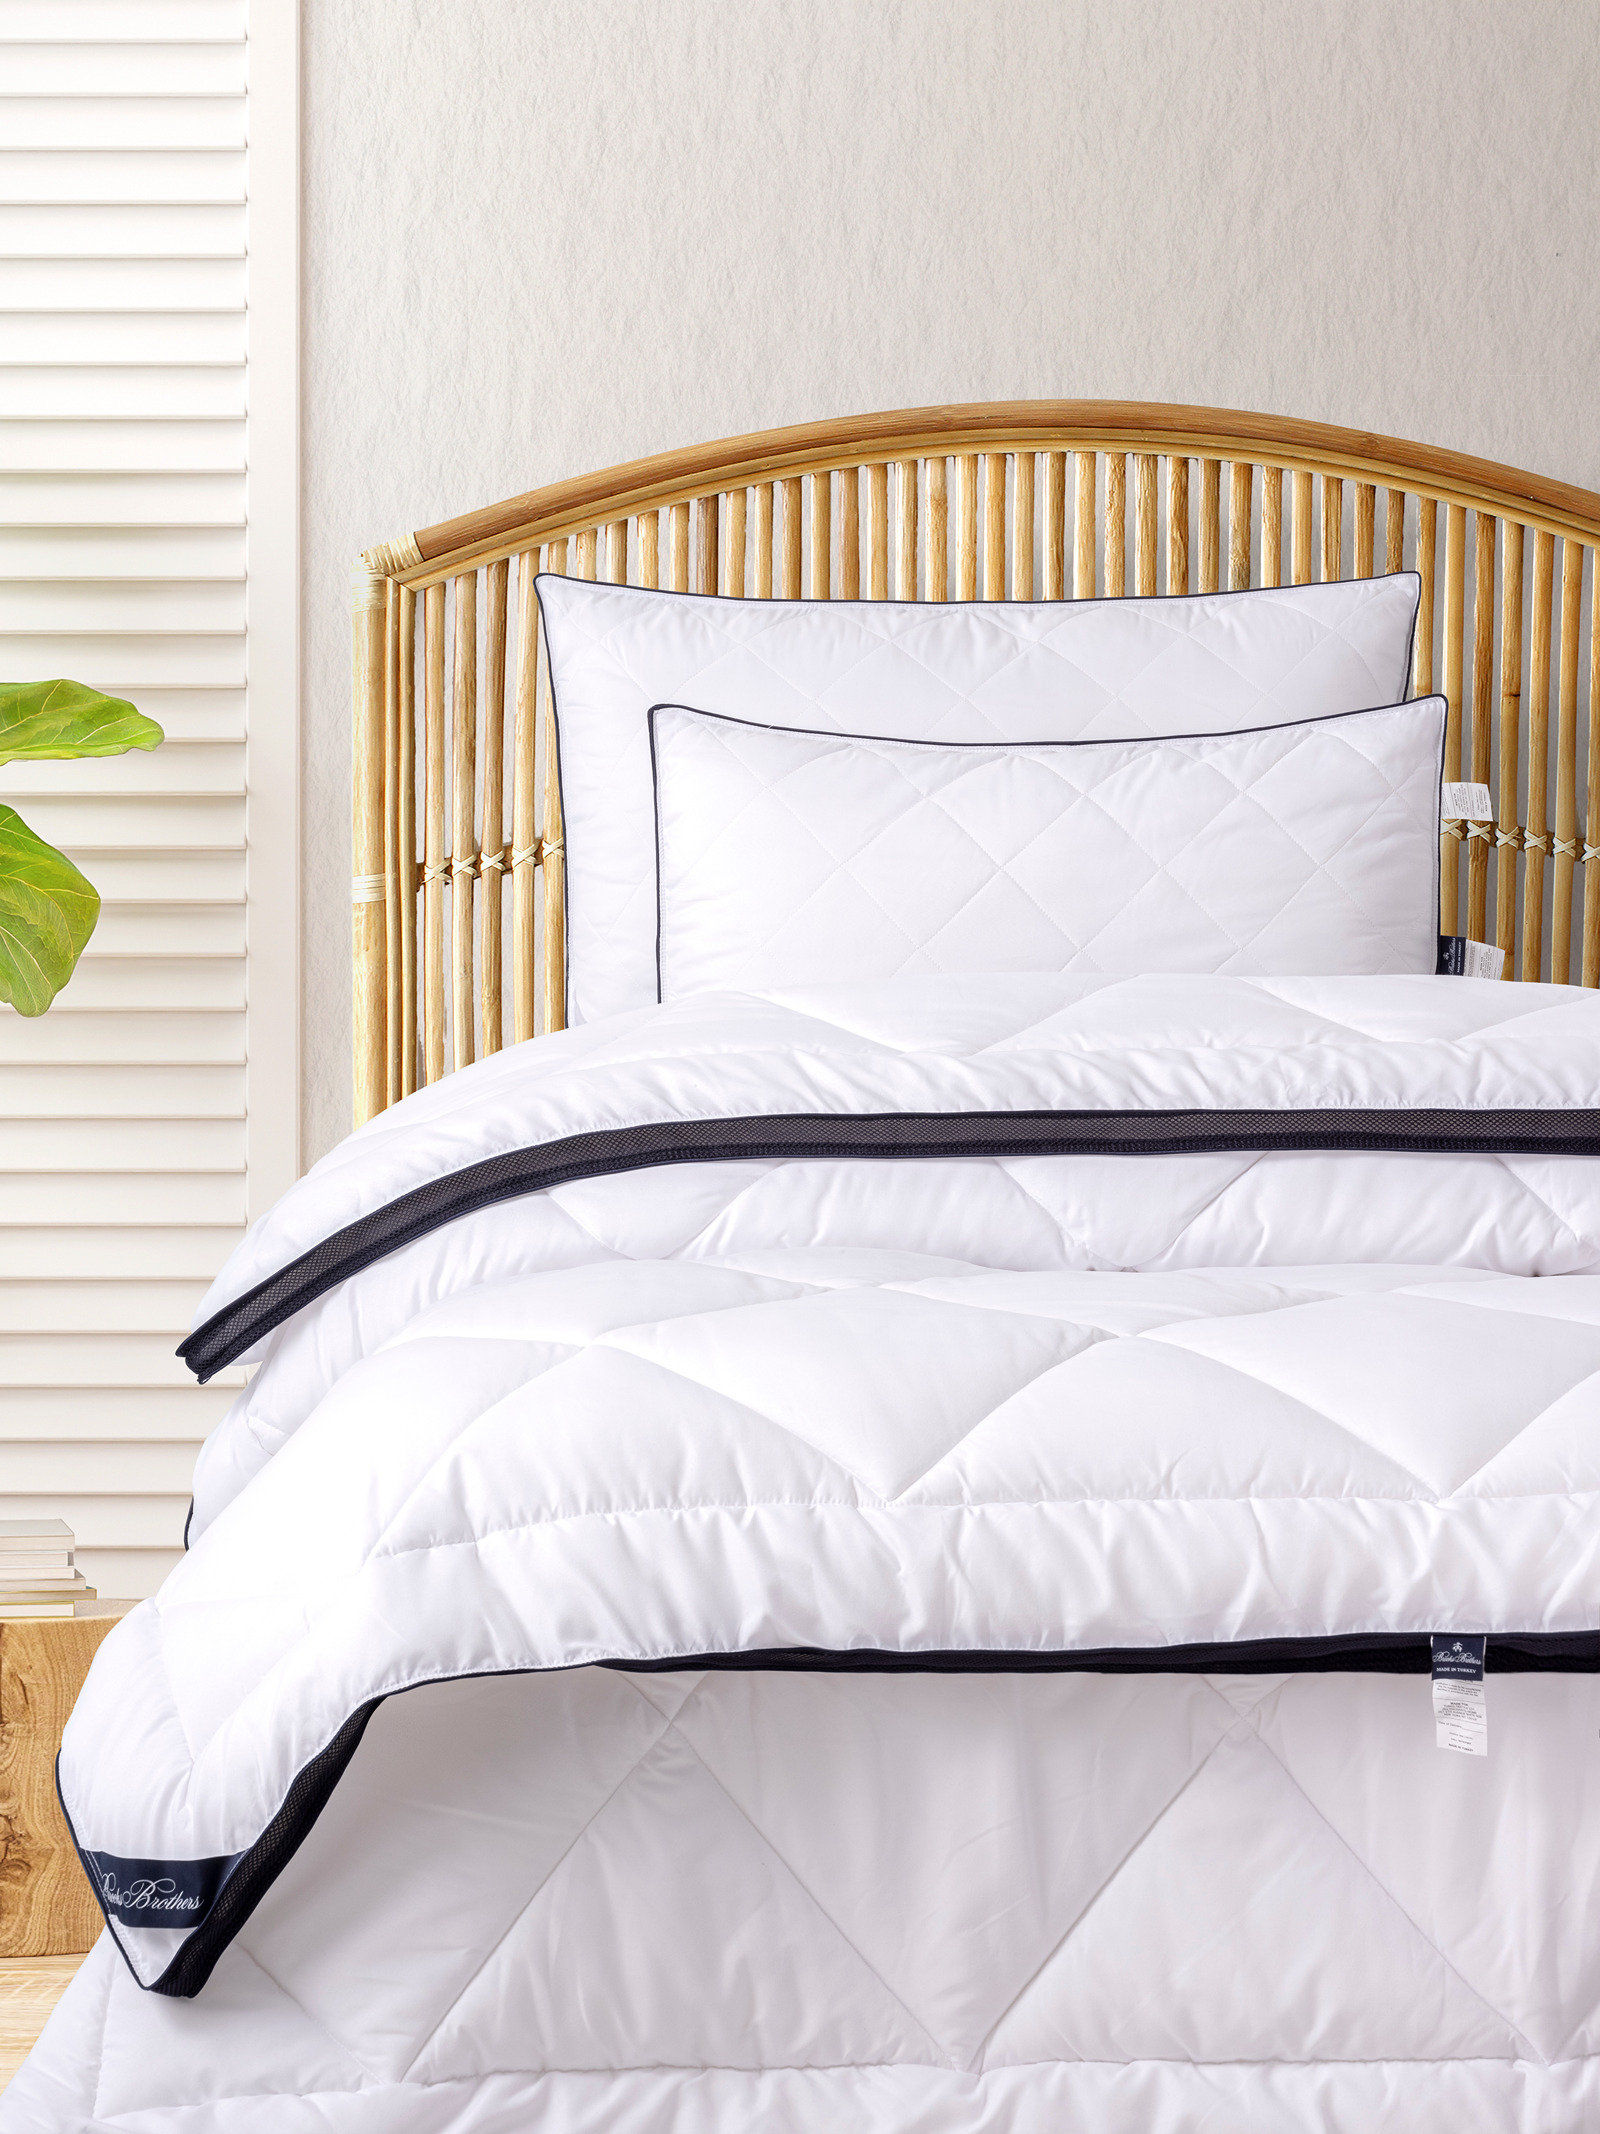  Pillow Guy All Season Gel Fiber Down-Alternative Comforter -  Full/Queen : Home & Kitchen